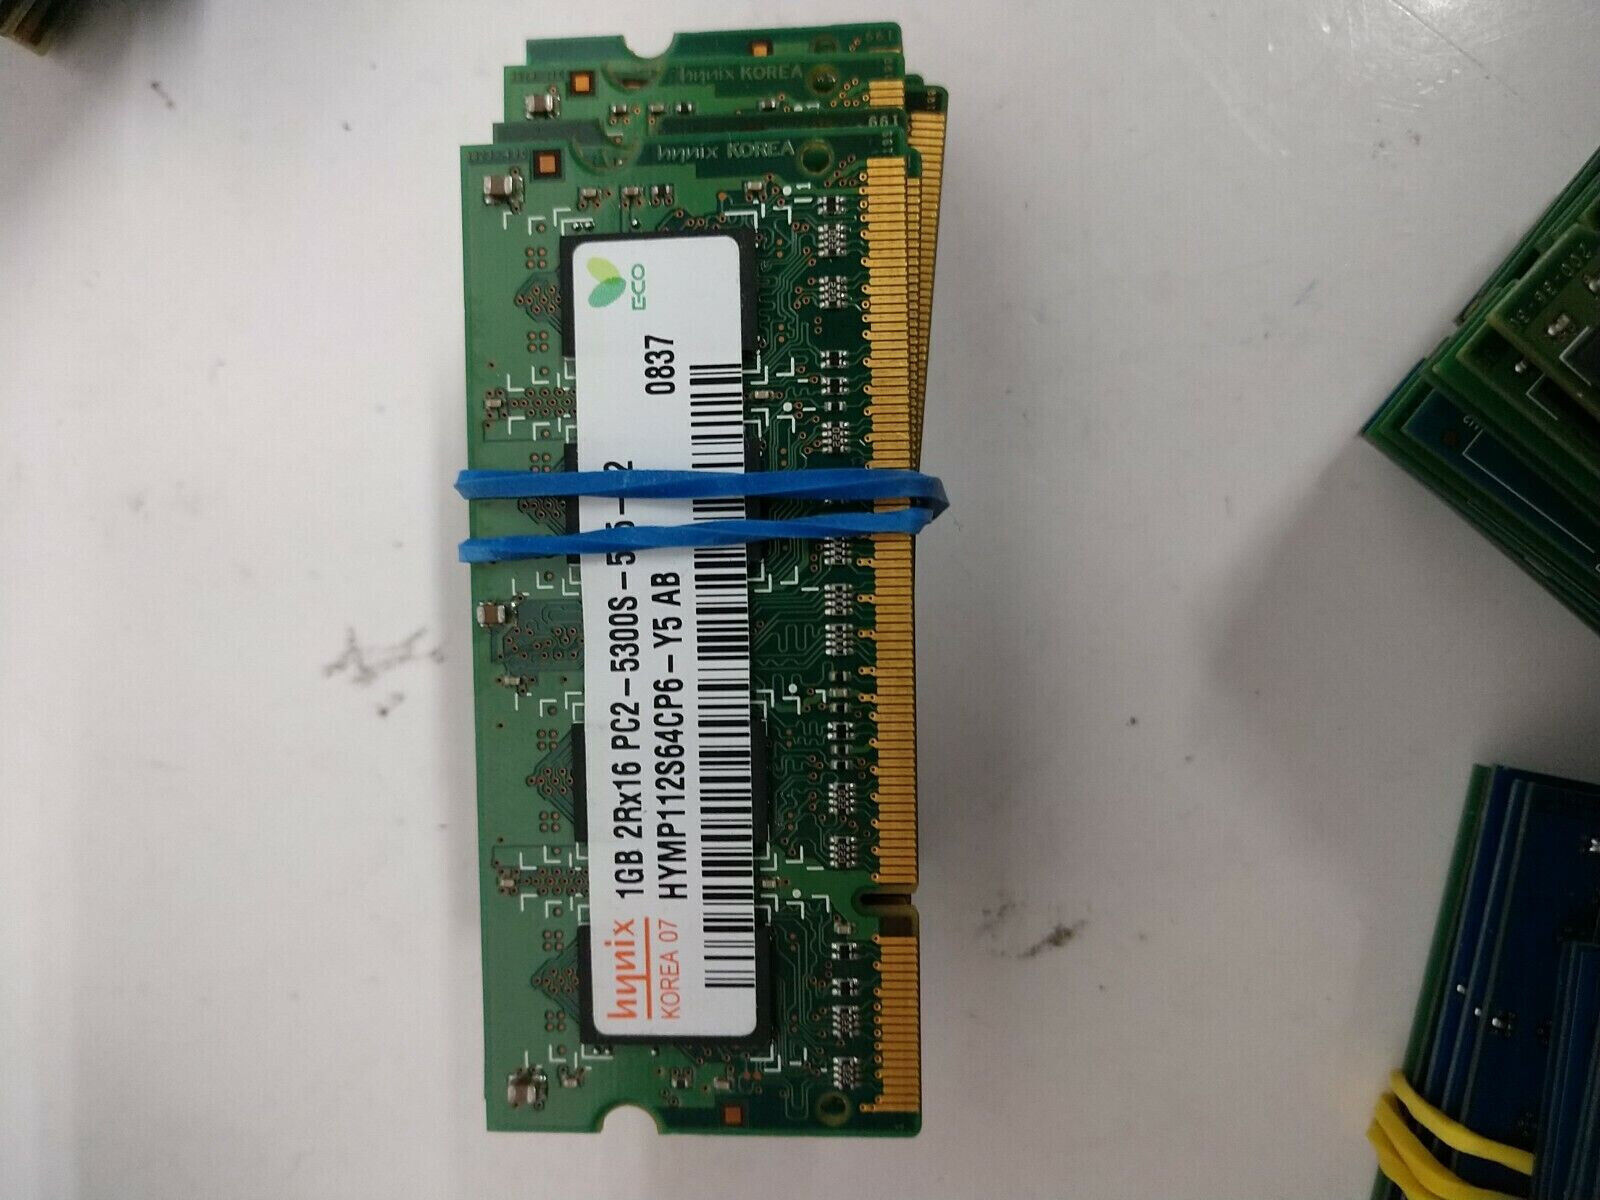 LOT OF 15 X MIXED BRAND 1GB PC2 5300S DDR2 667 LAPTOP MEMORY SODIMM RAM